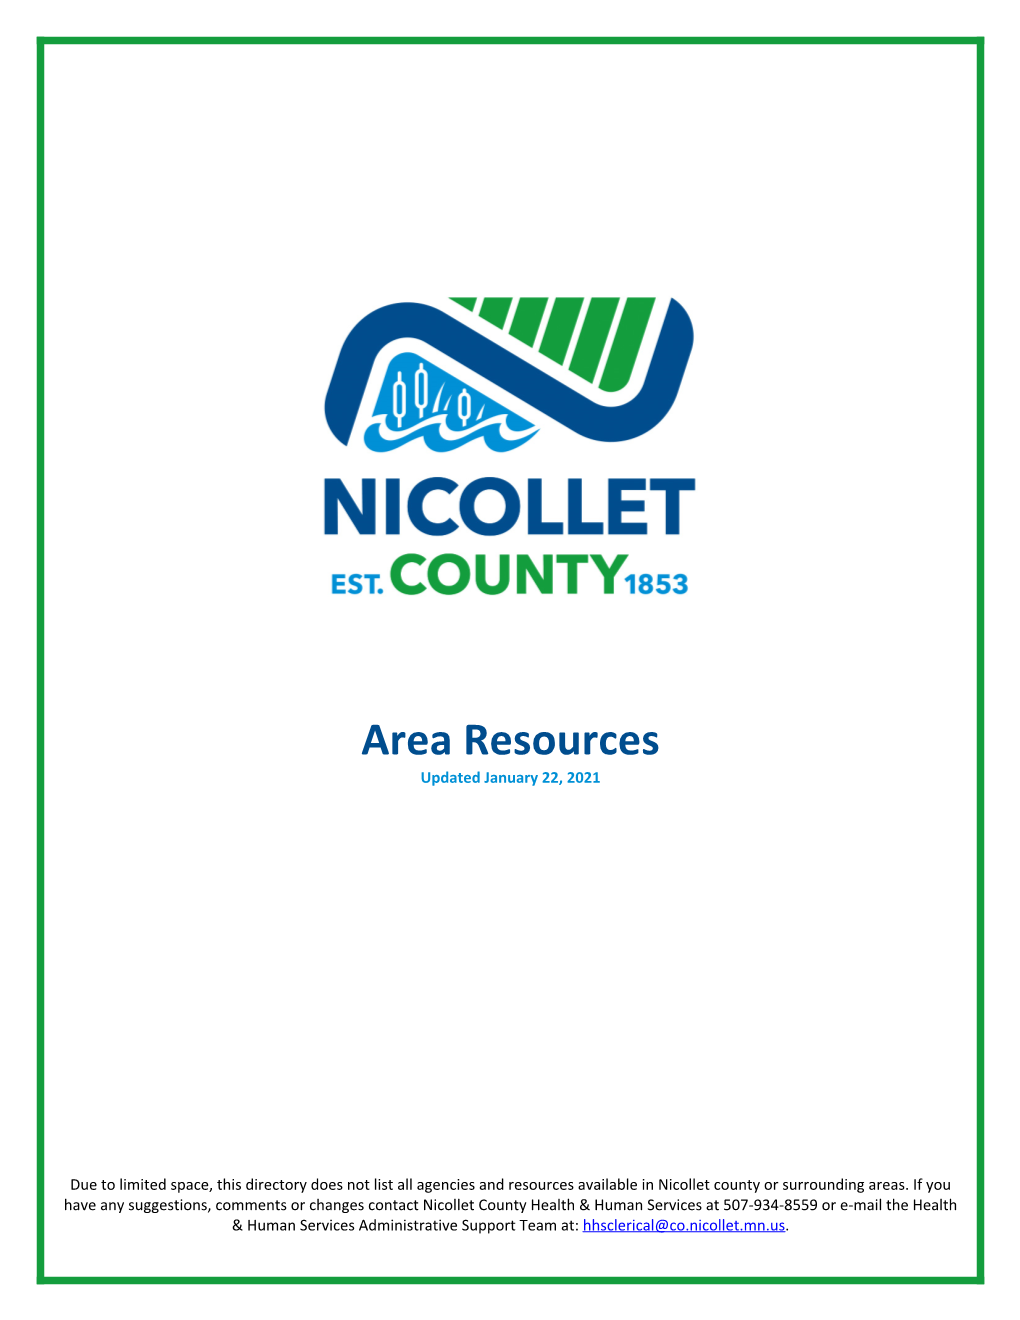 Nicollet County Area Resources